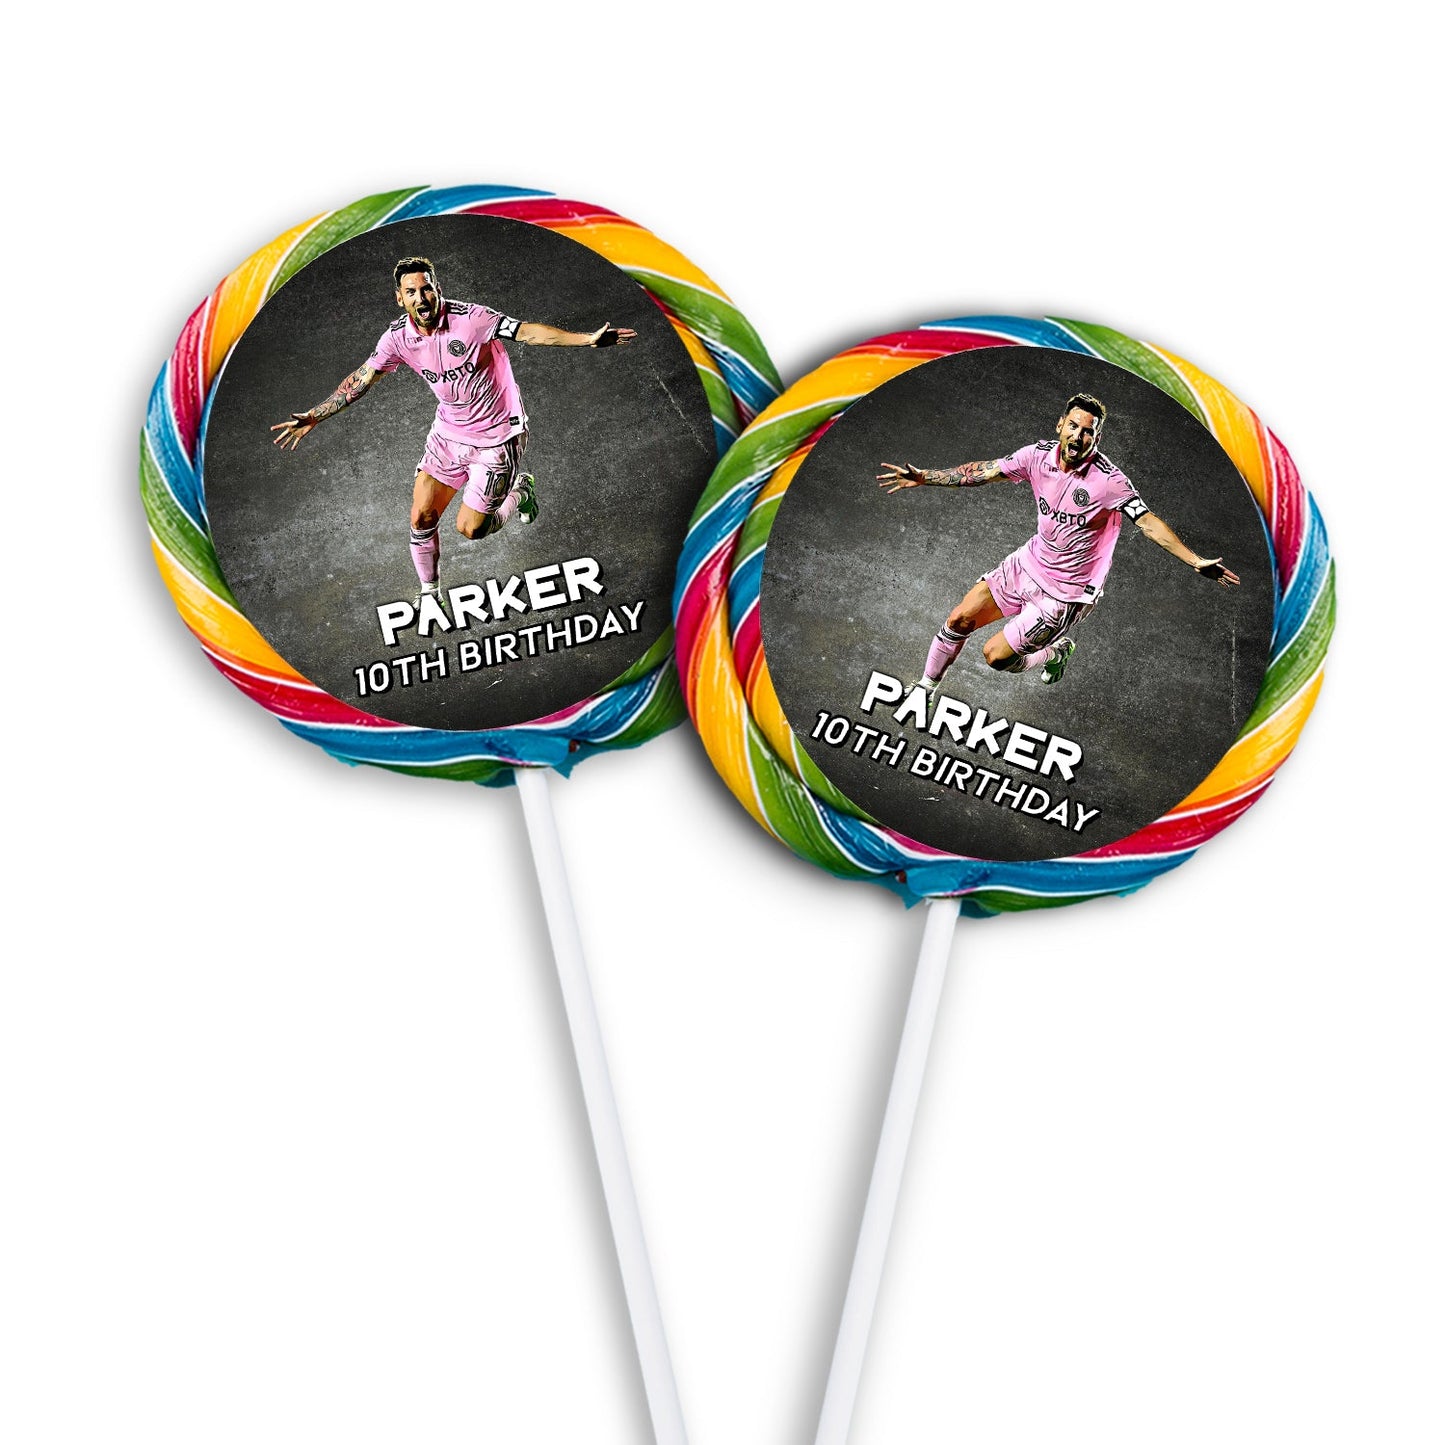 Lollipop label featuring Lionel Messi